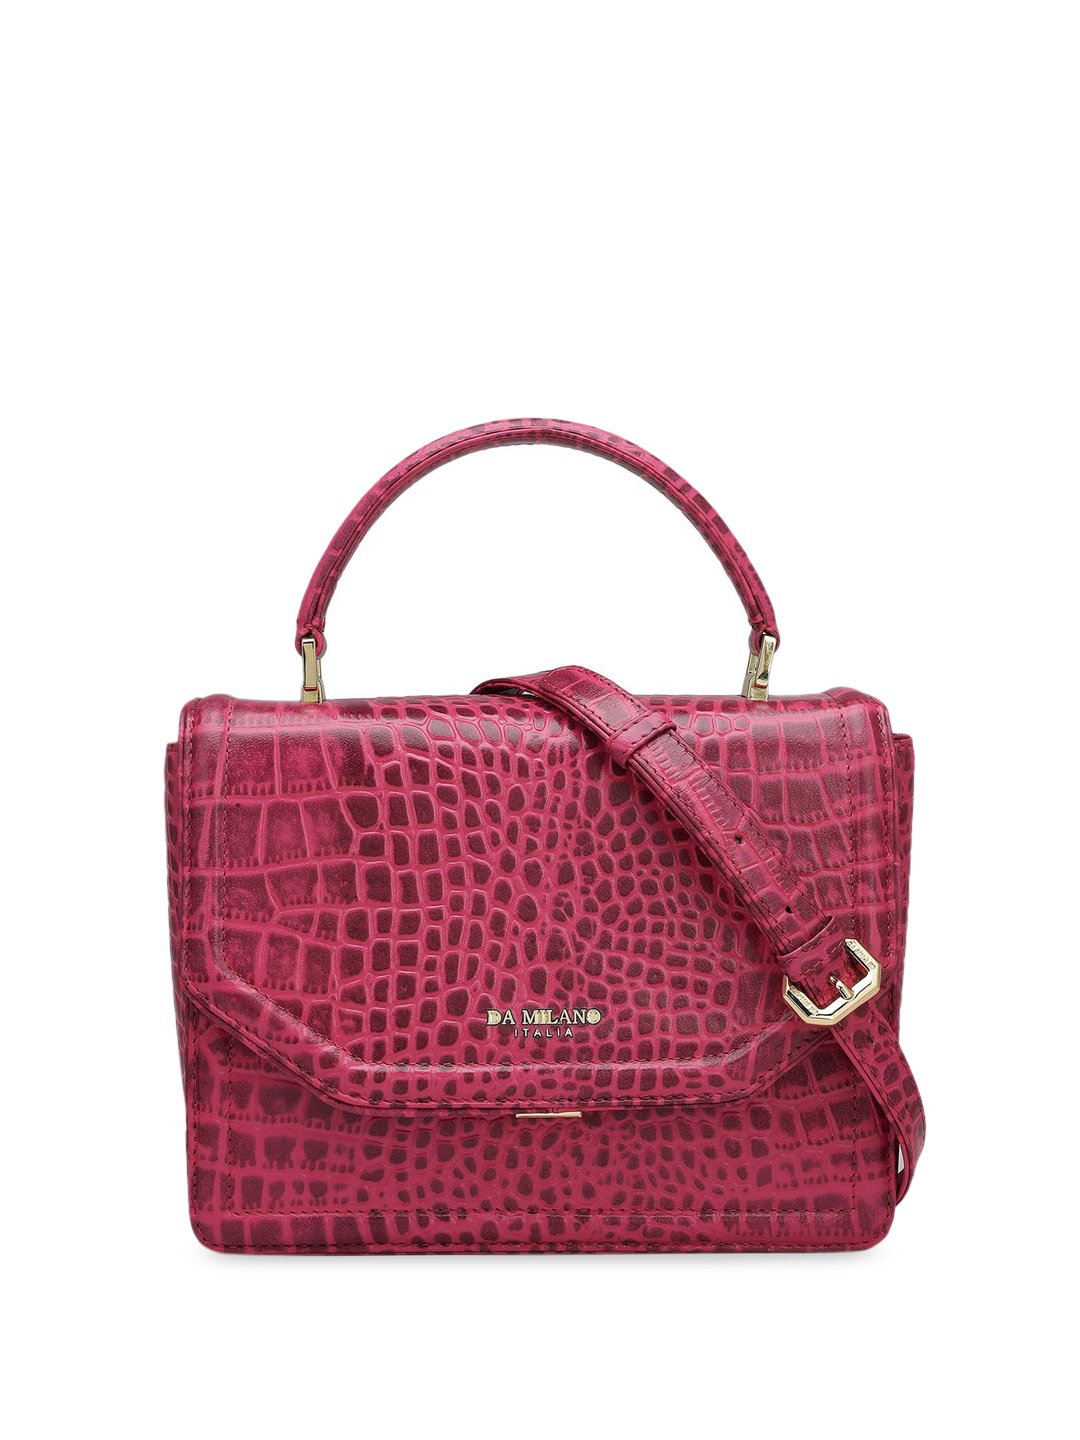 

Da Milano Animal Textured Leather Structured Handheld Bag, Magenta